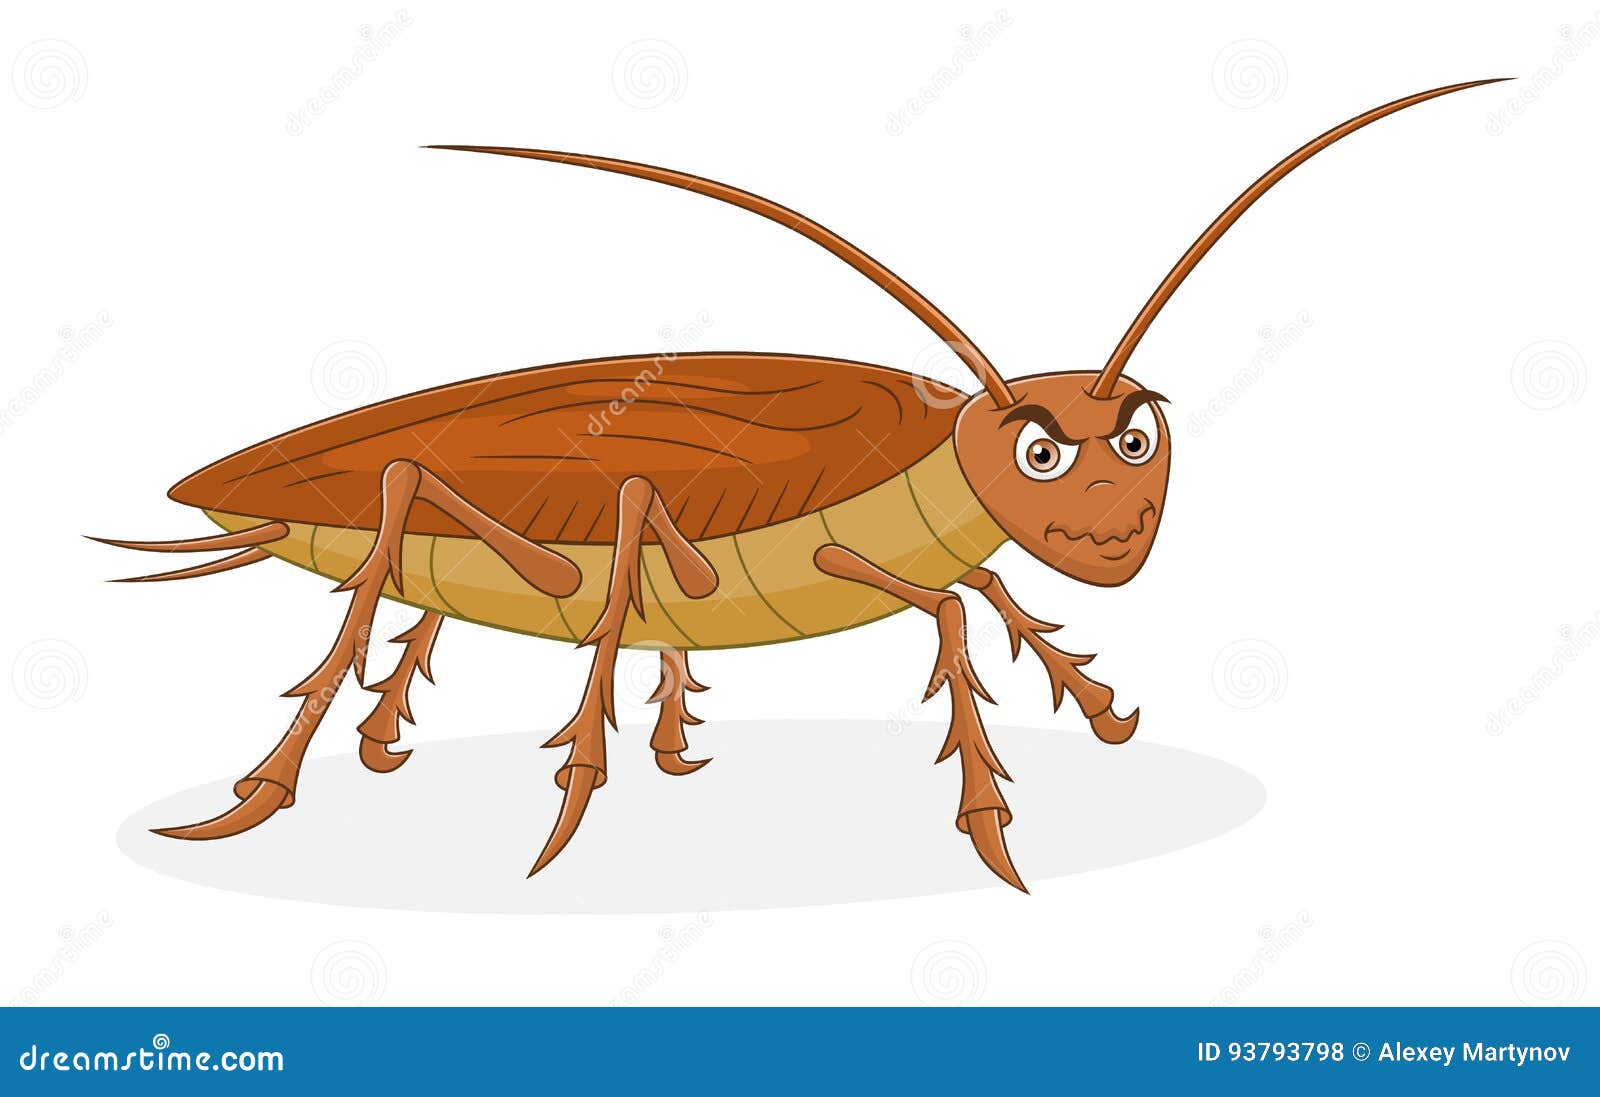 Cartoon cockroach stock vector. Illustration of dirty - 93793798